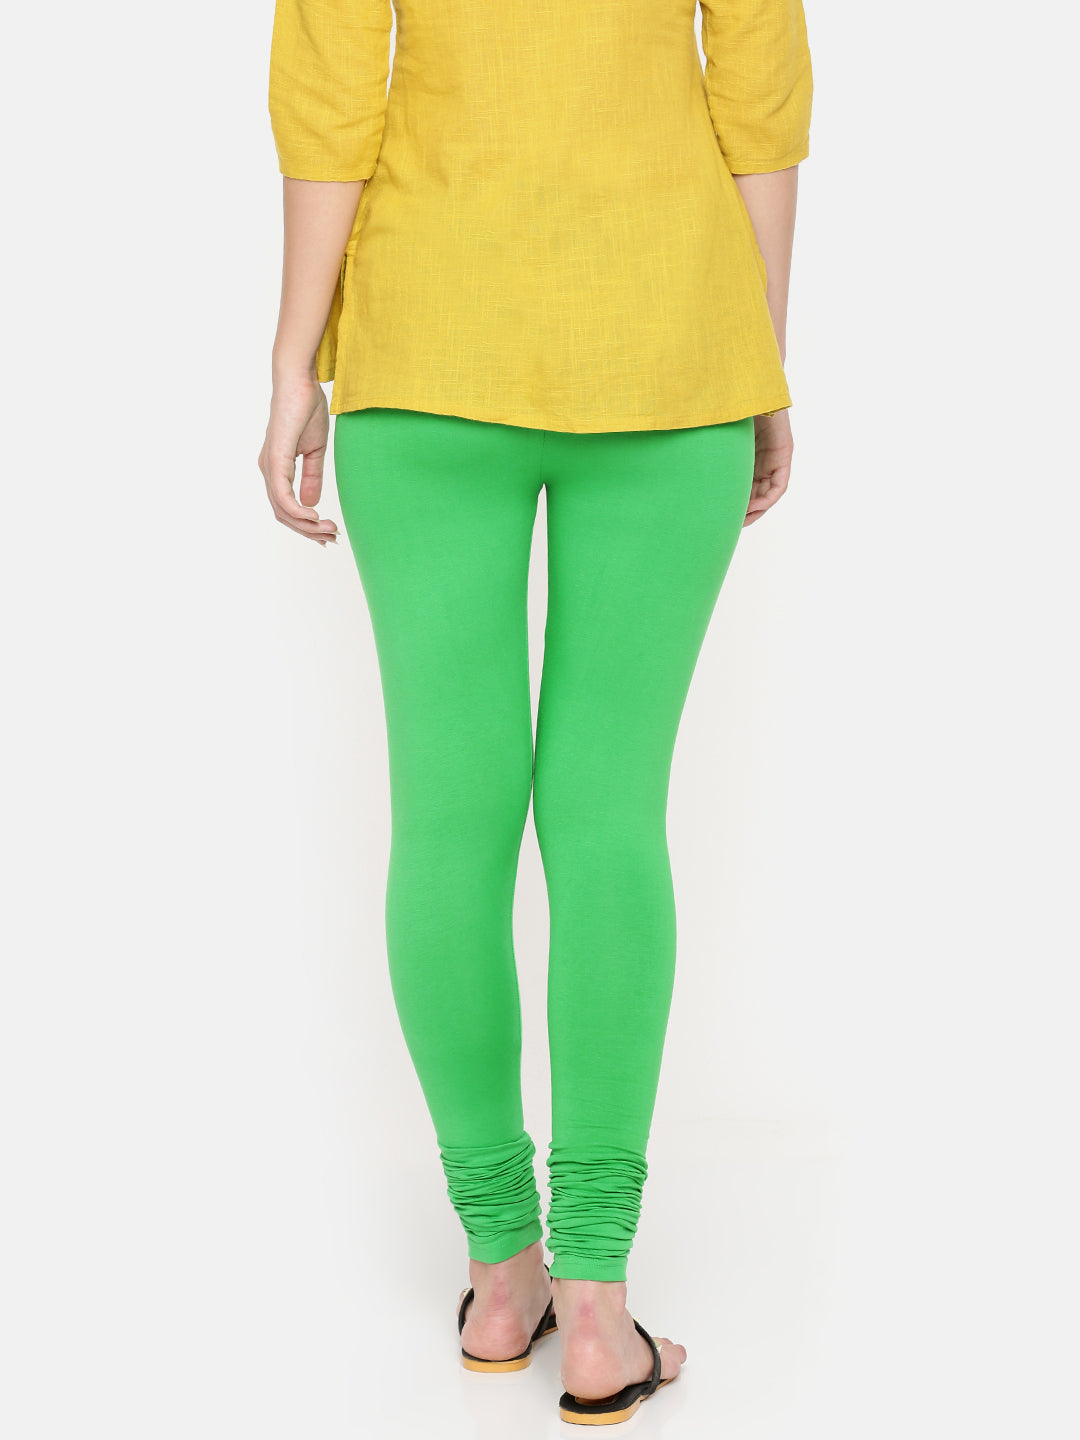 Desirable Parrot Green Coloured Plain Cotton Leggings | Leemboodi